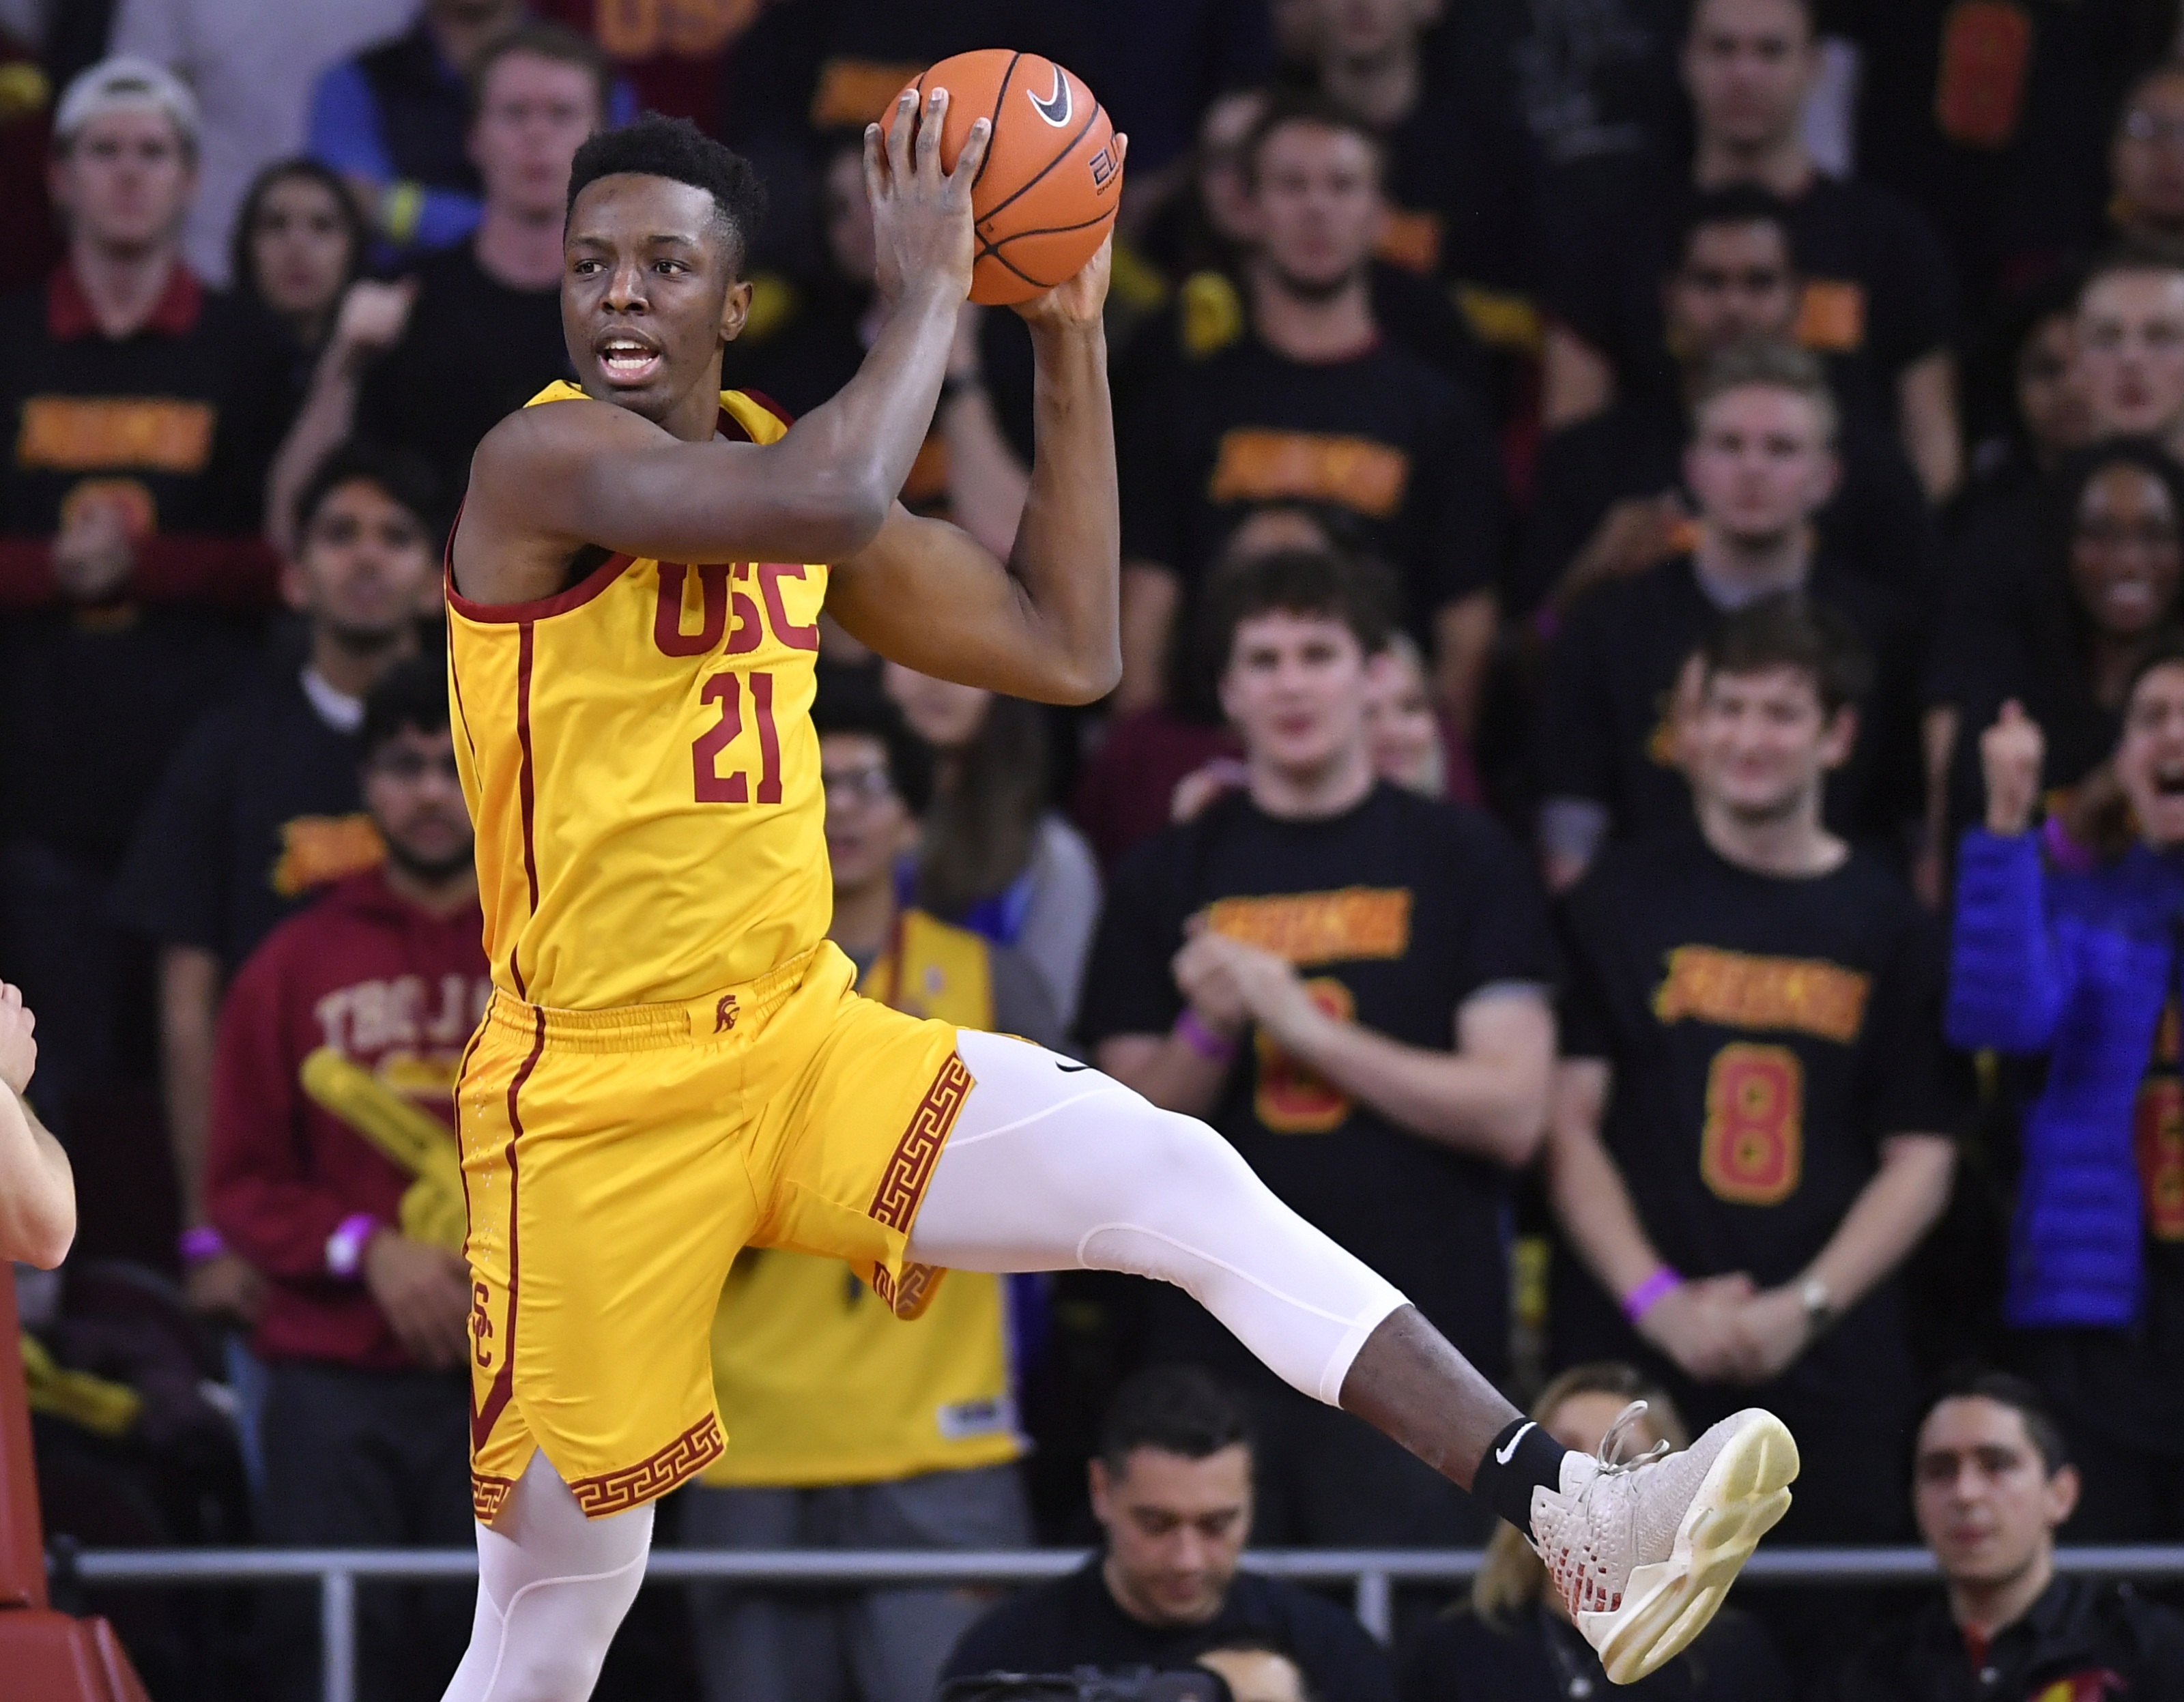 USC's Onyeka Okongwu confident in ability to fit into modern NBA